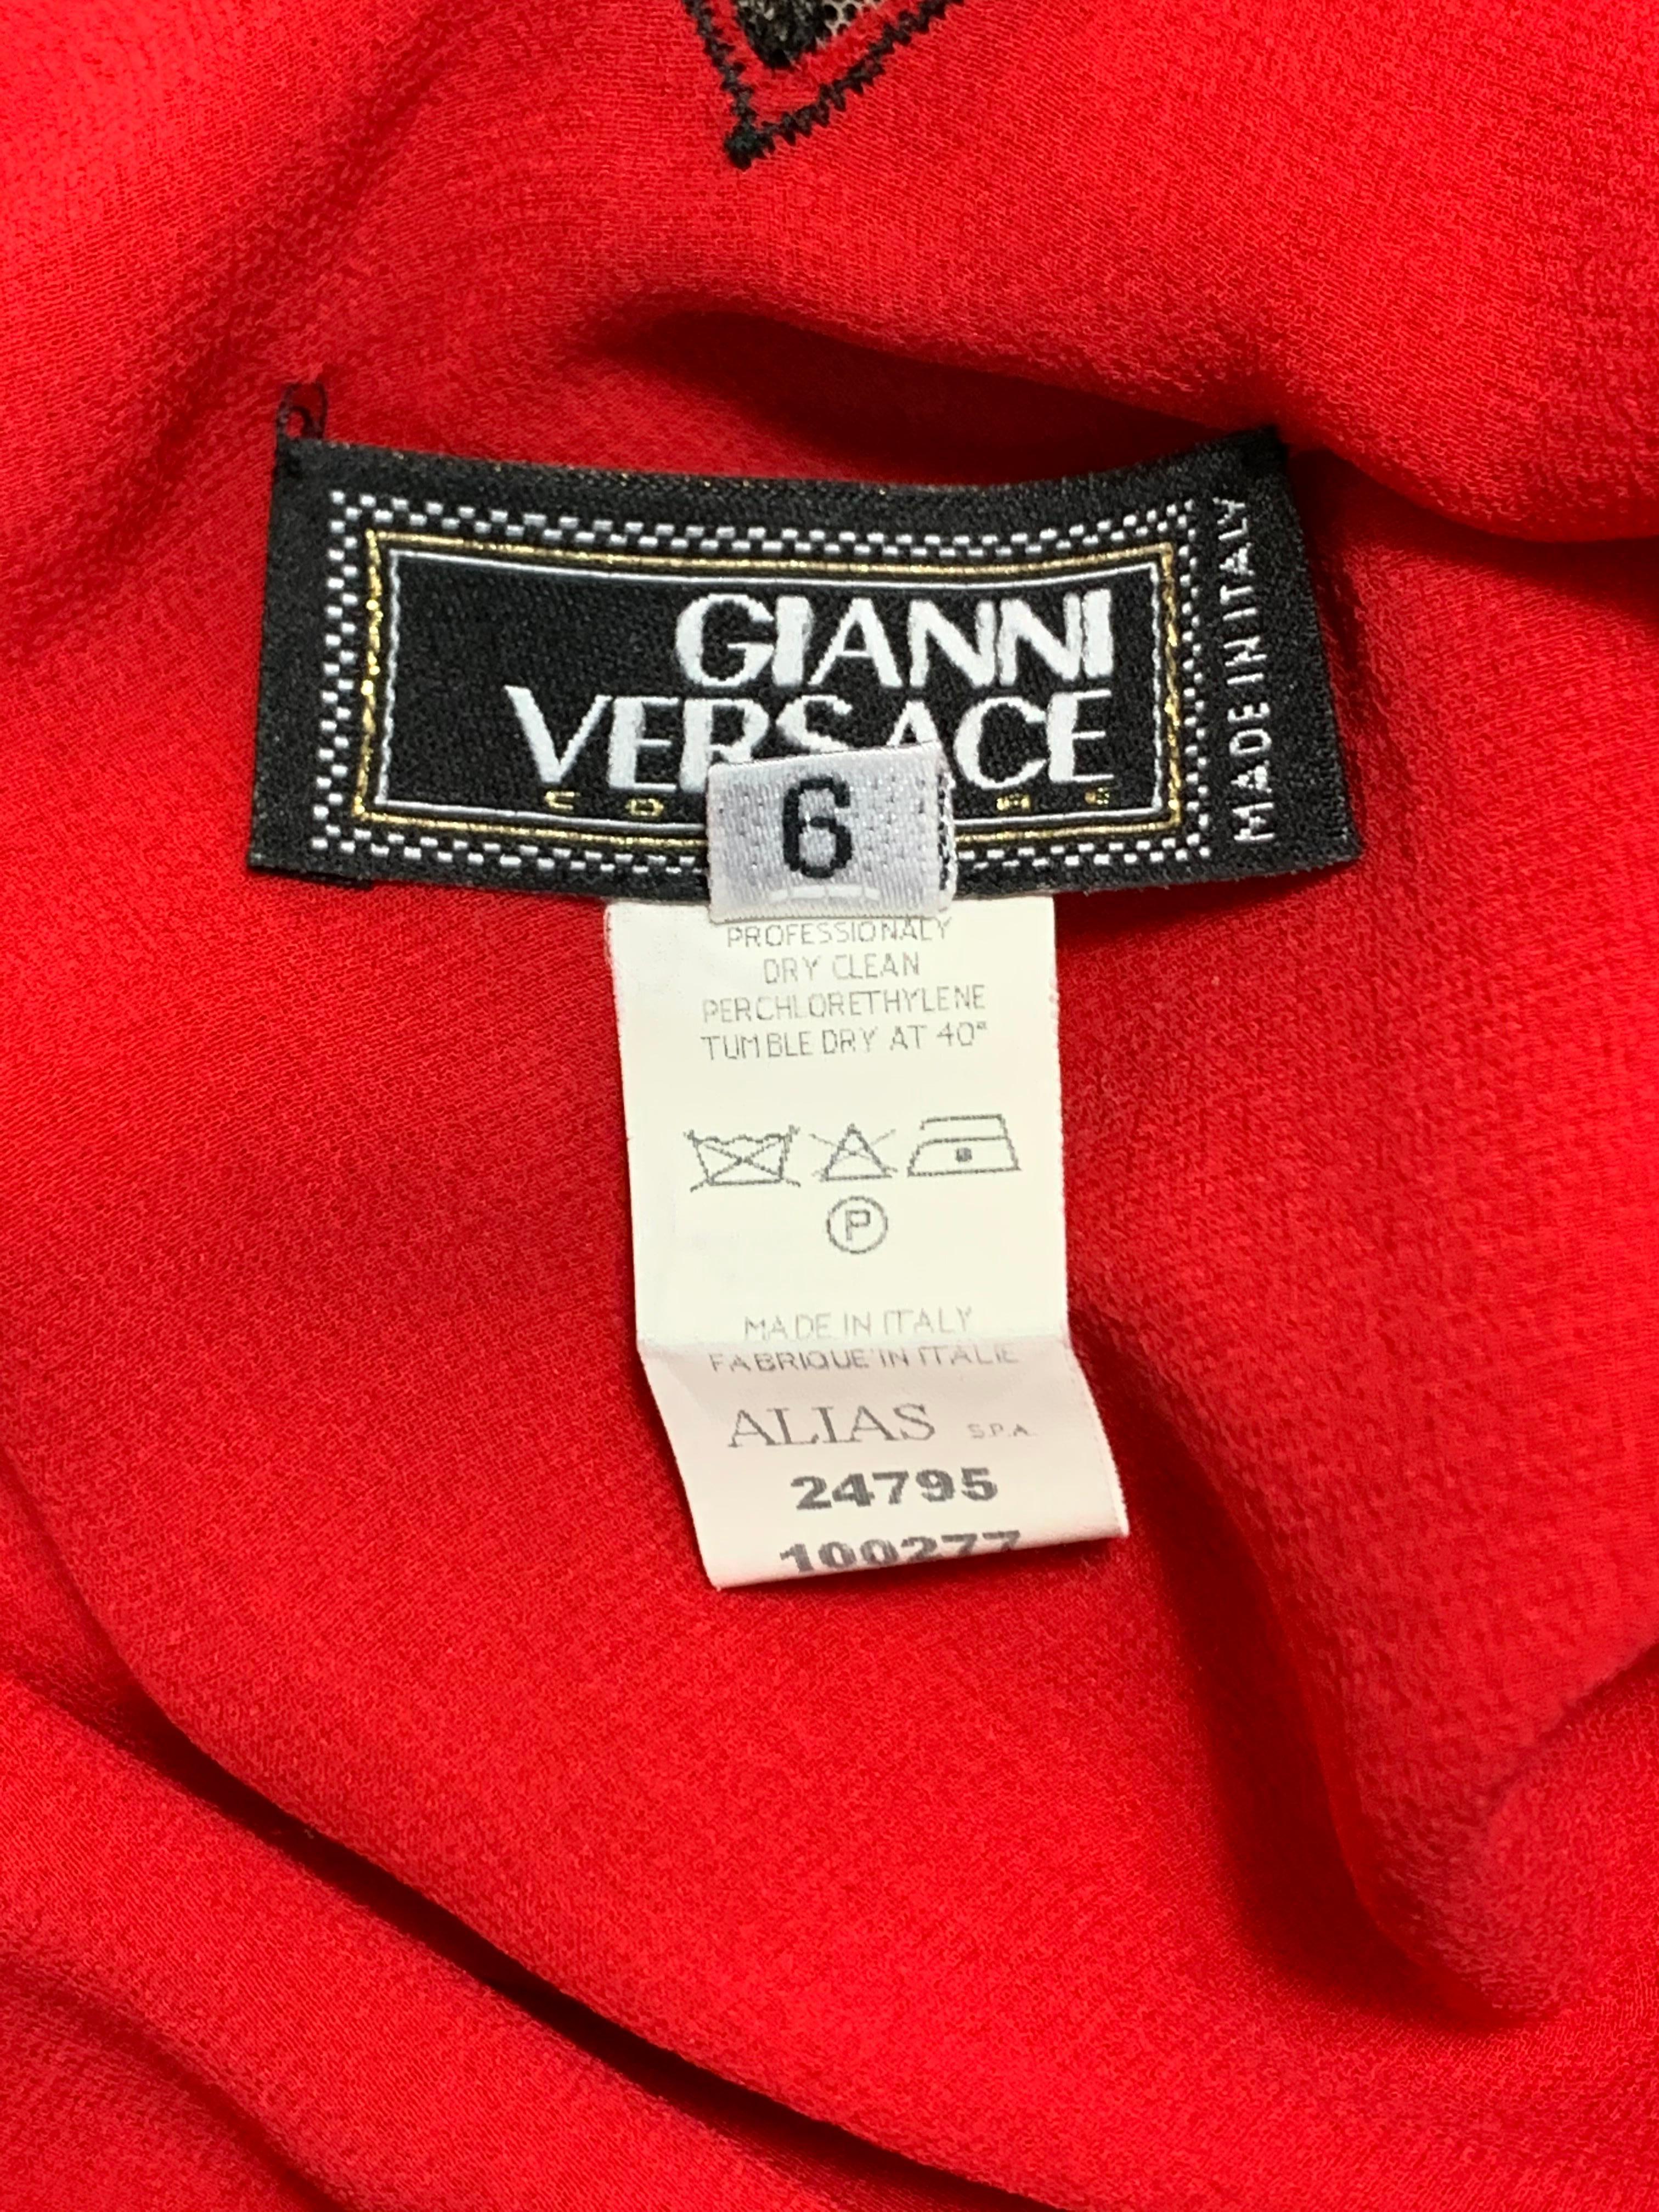 Women's S/S 2002 Gianni Versace Red Mini Dress Sheer Black Lace